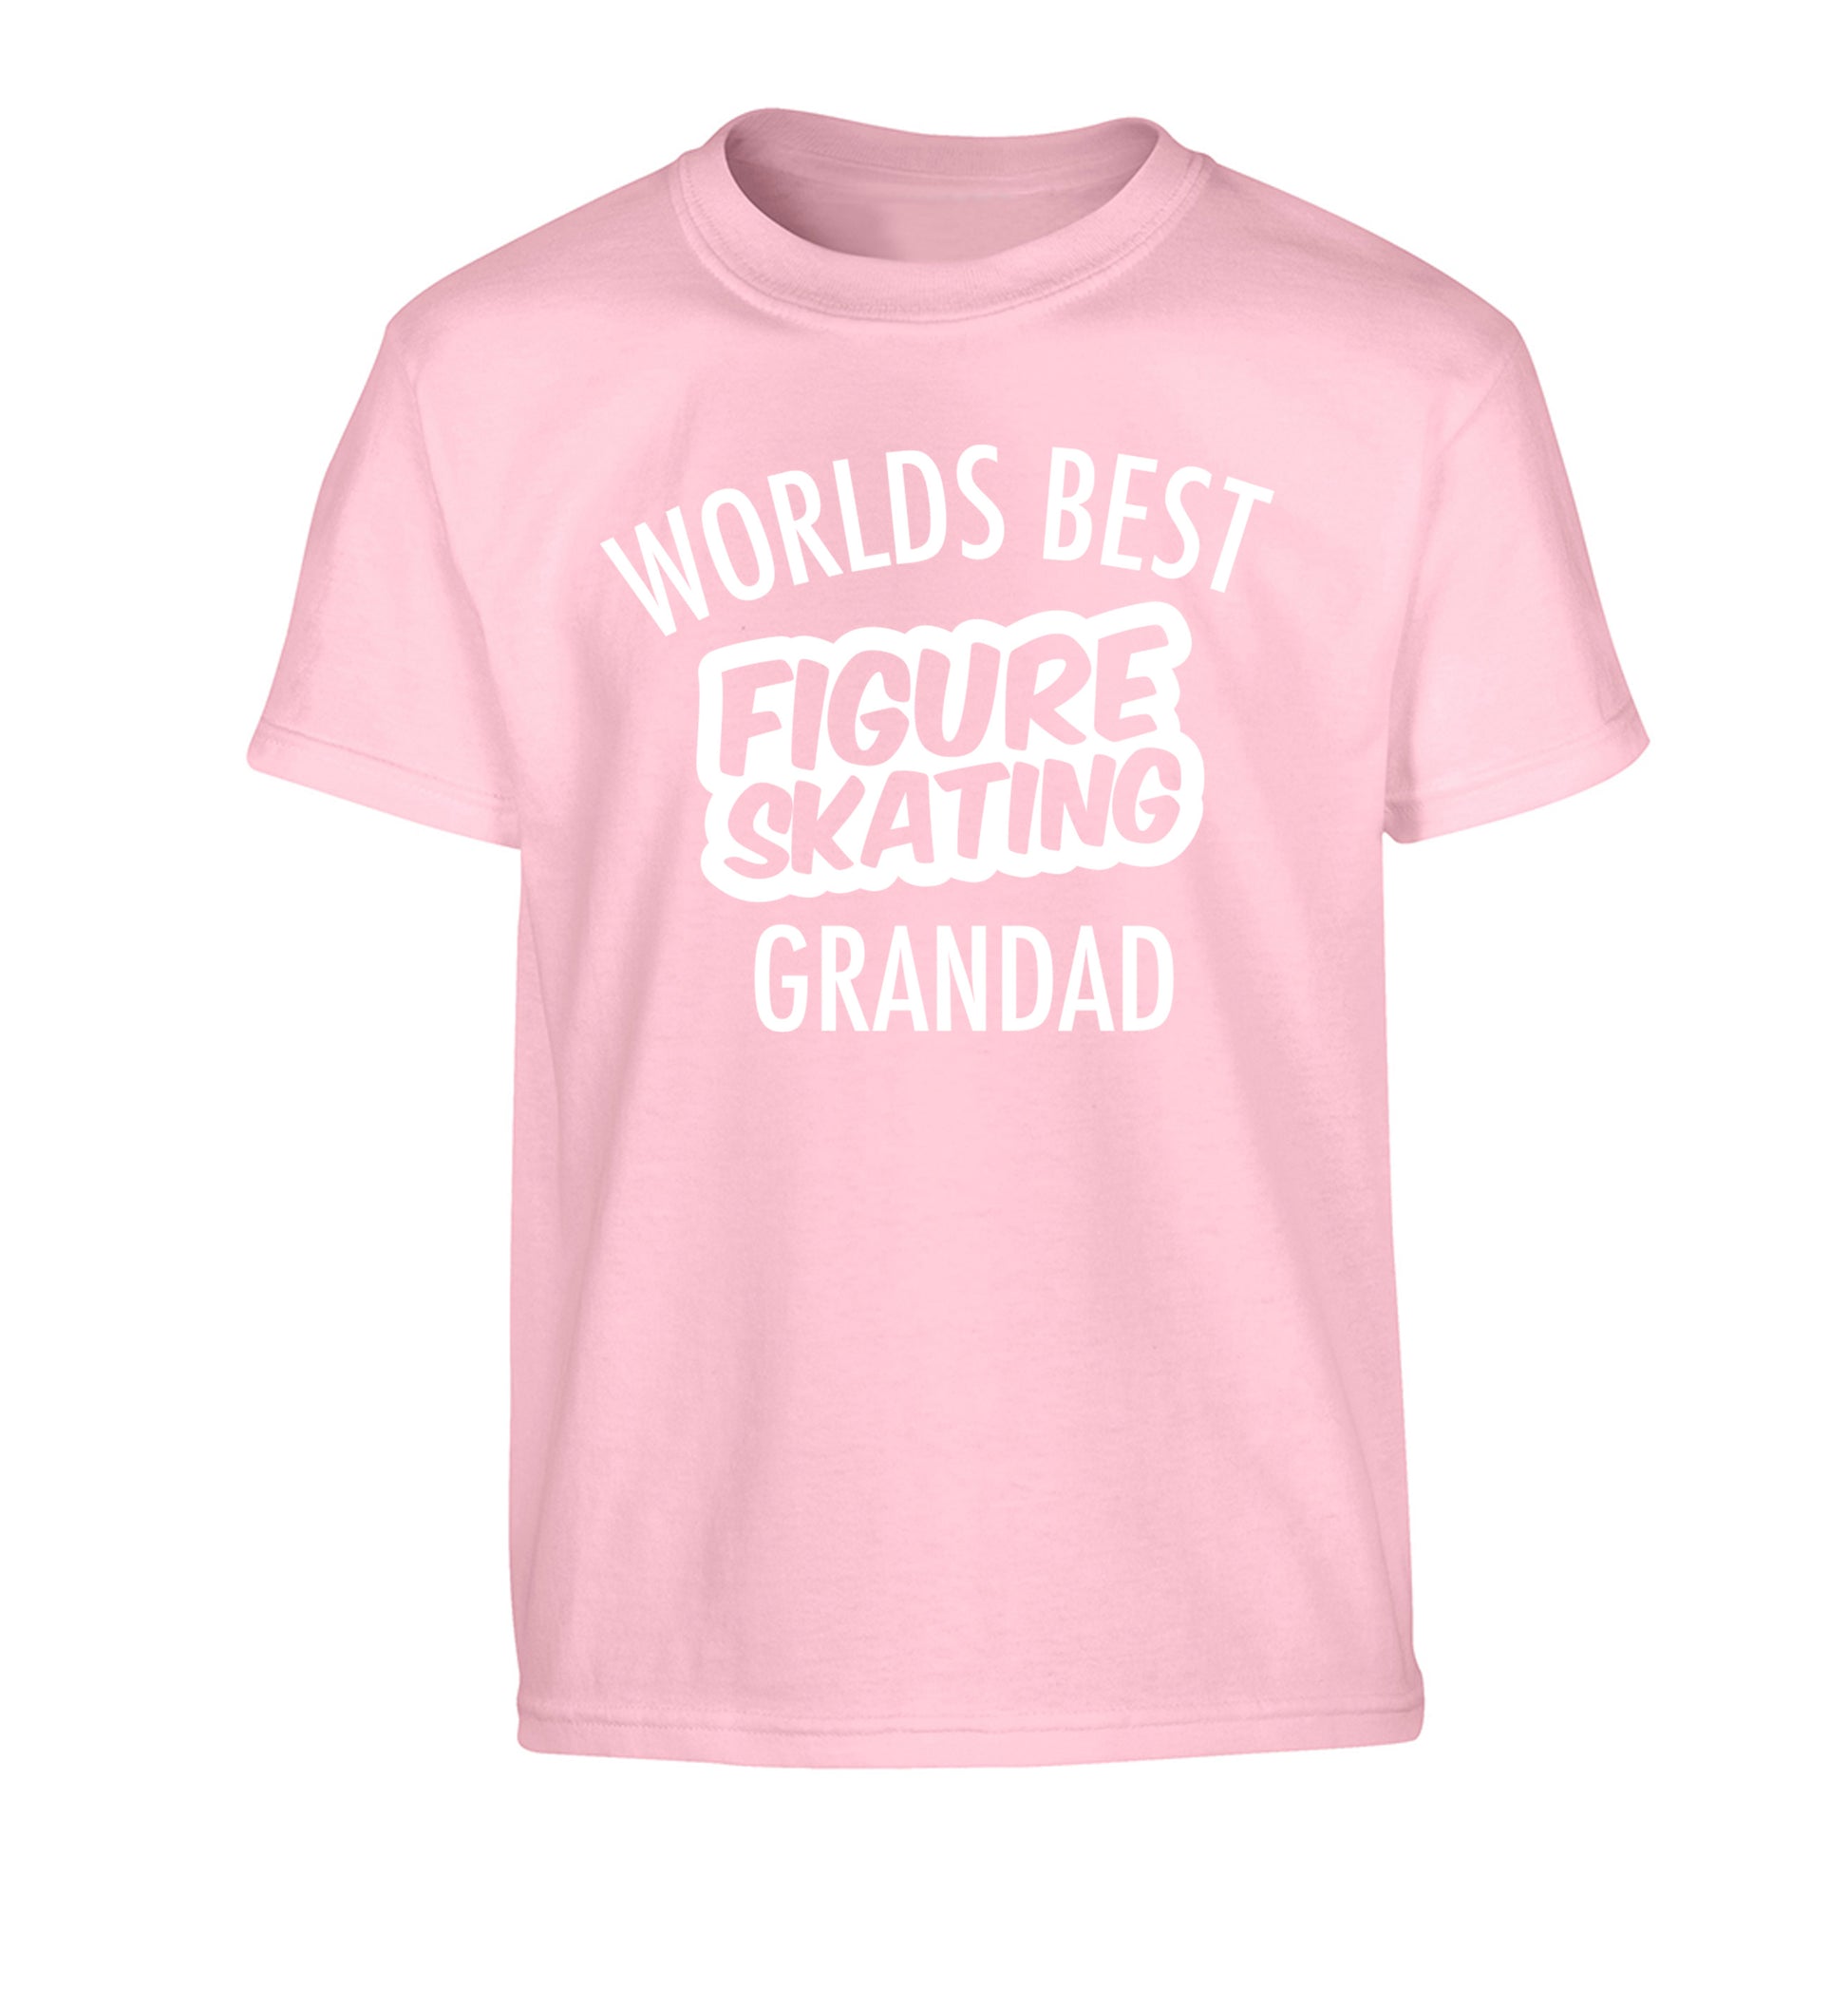 Worlds best figure skating grandad Children's light pink Tshirt 12-14 Years